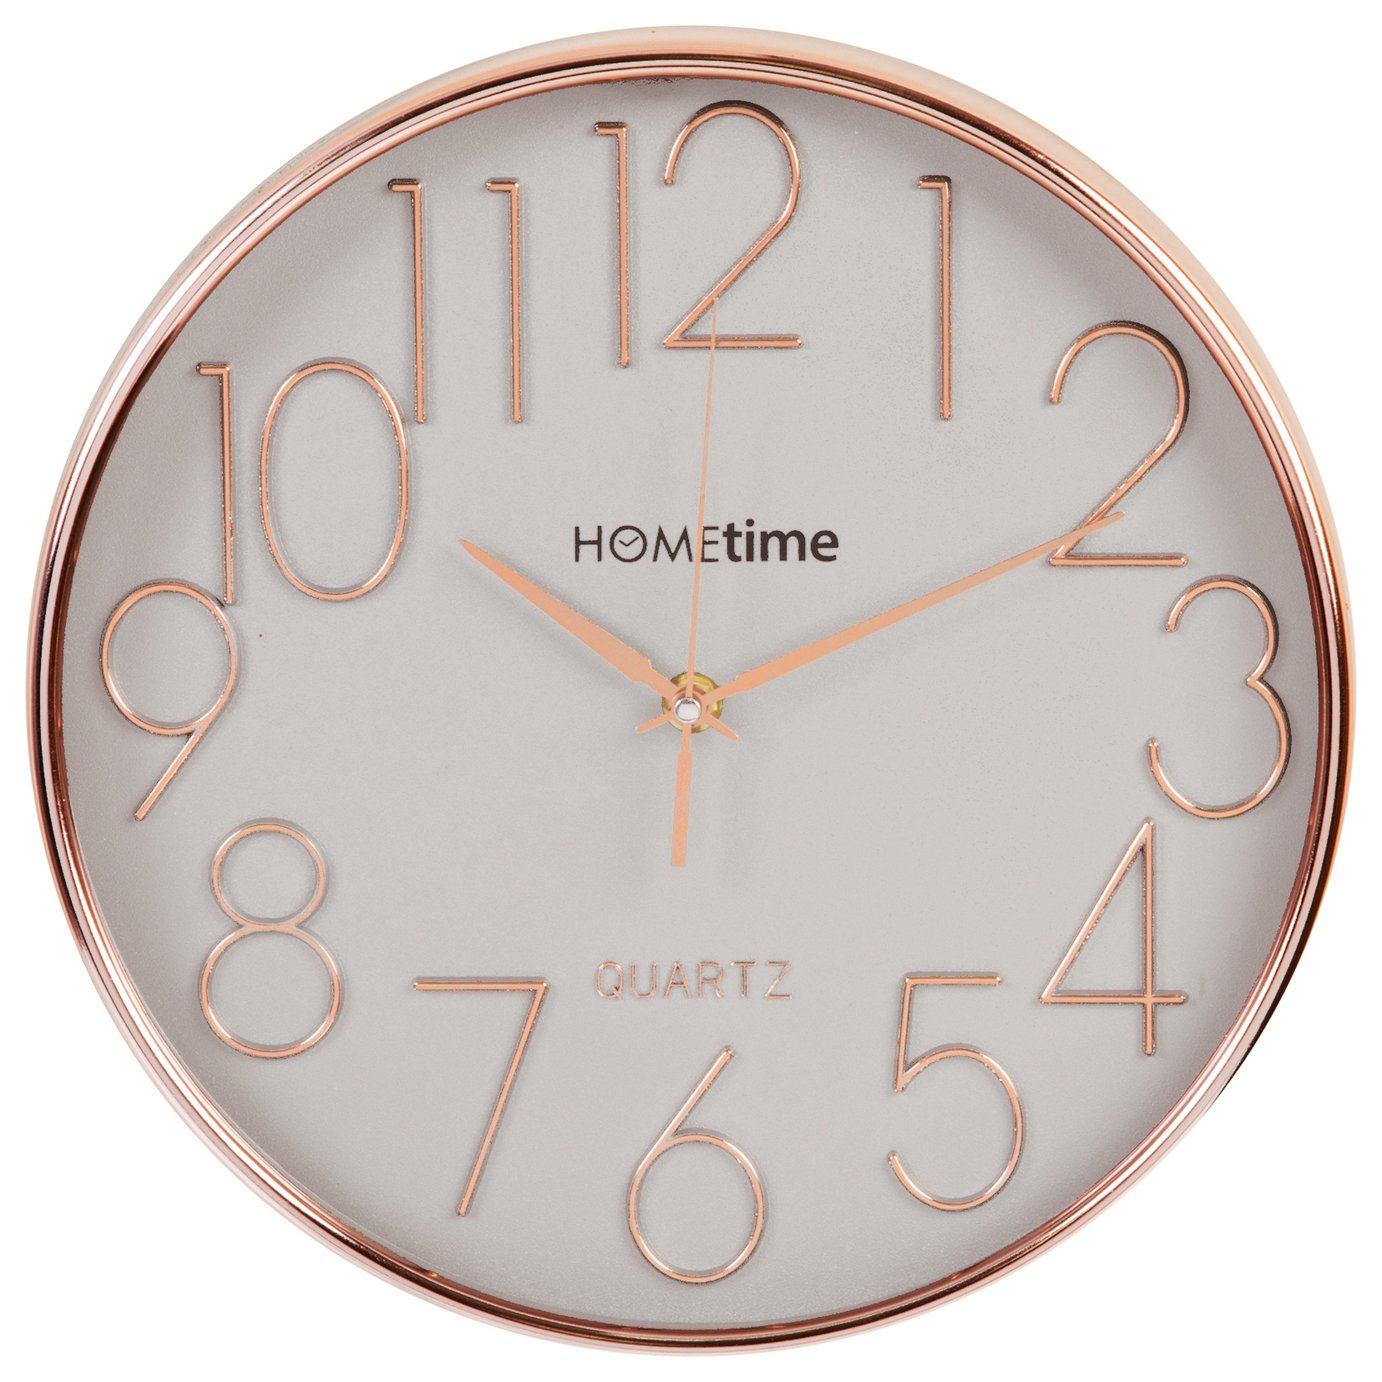 Hometime Wall Clock - Copper & Grey